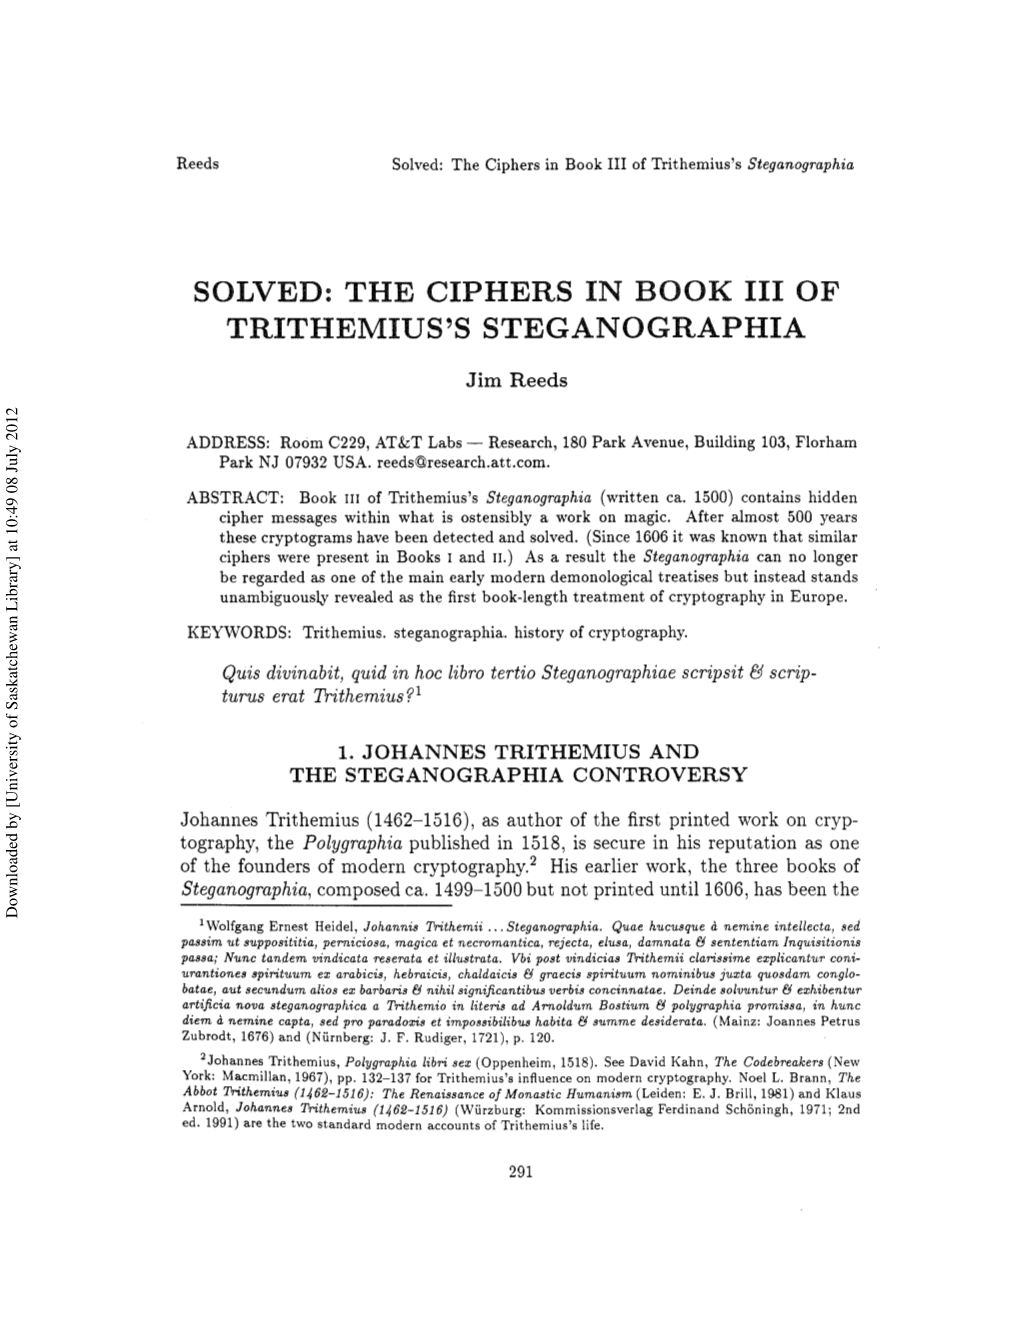 Solved: the Ciphers in Book III of Trithemius's Steganographia